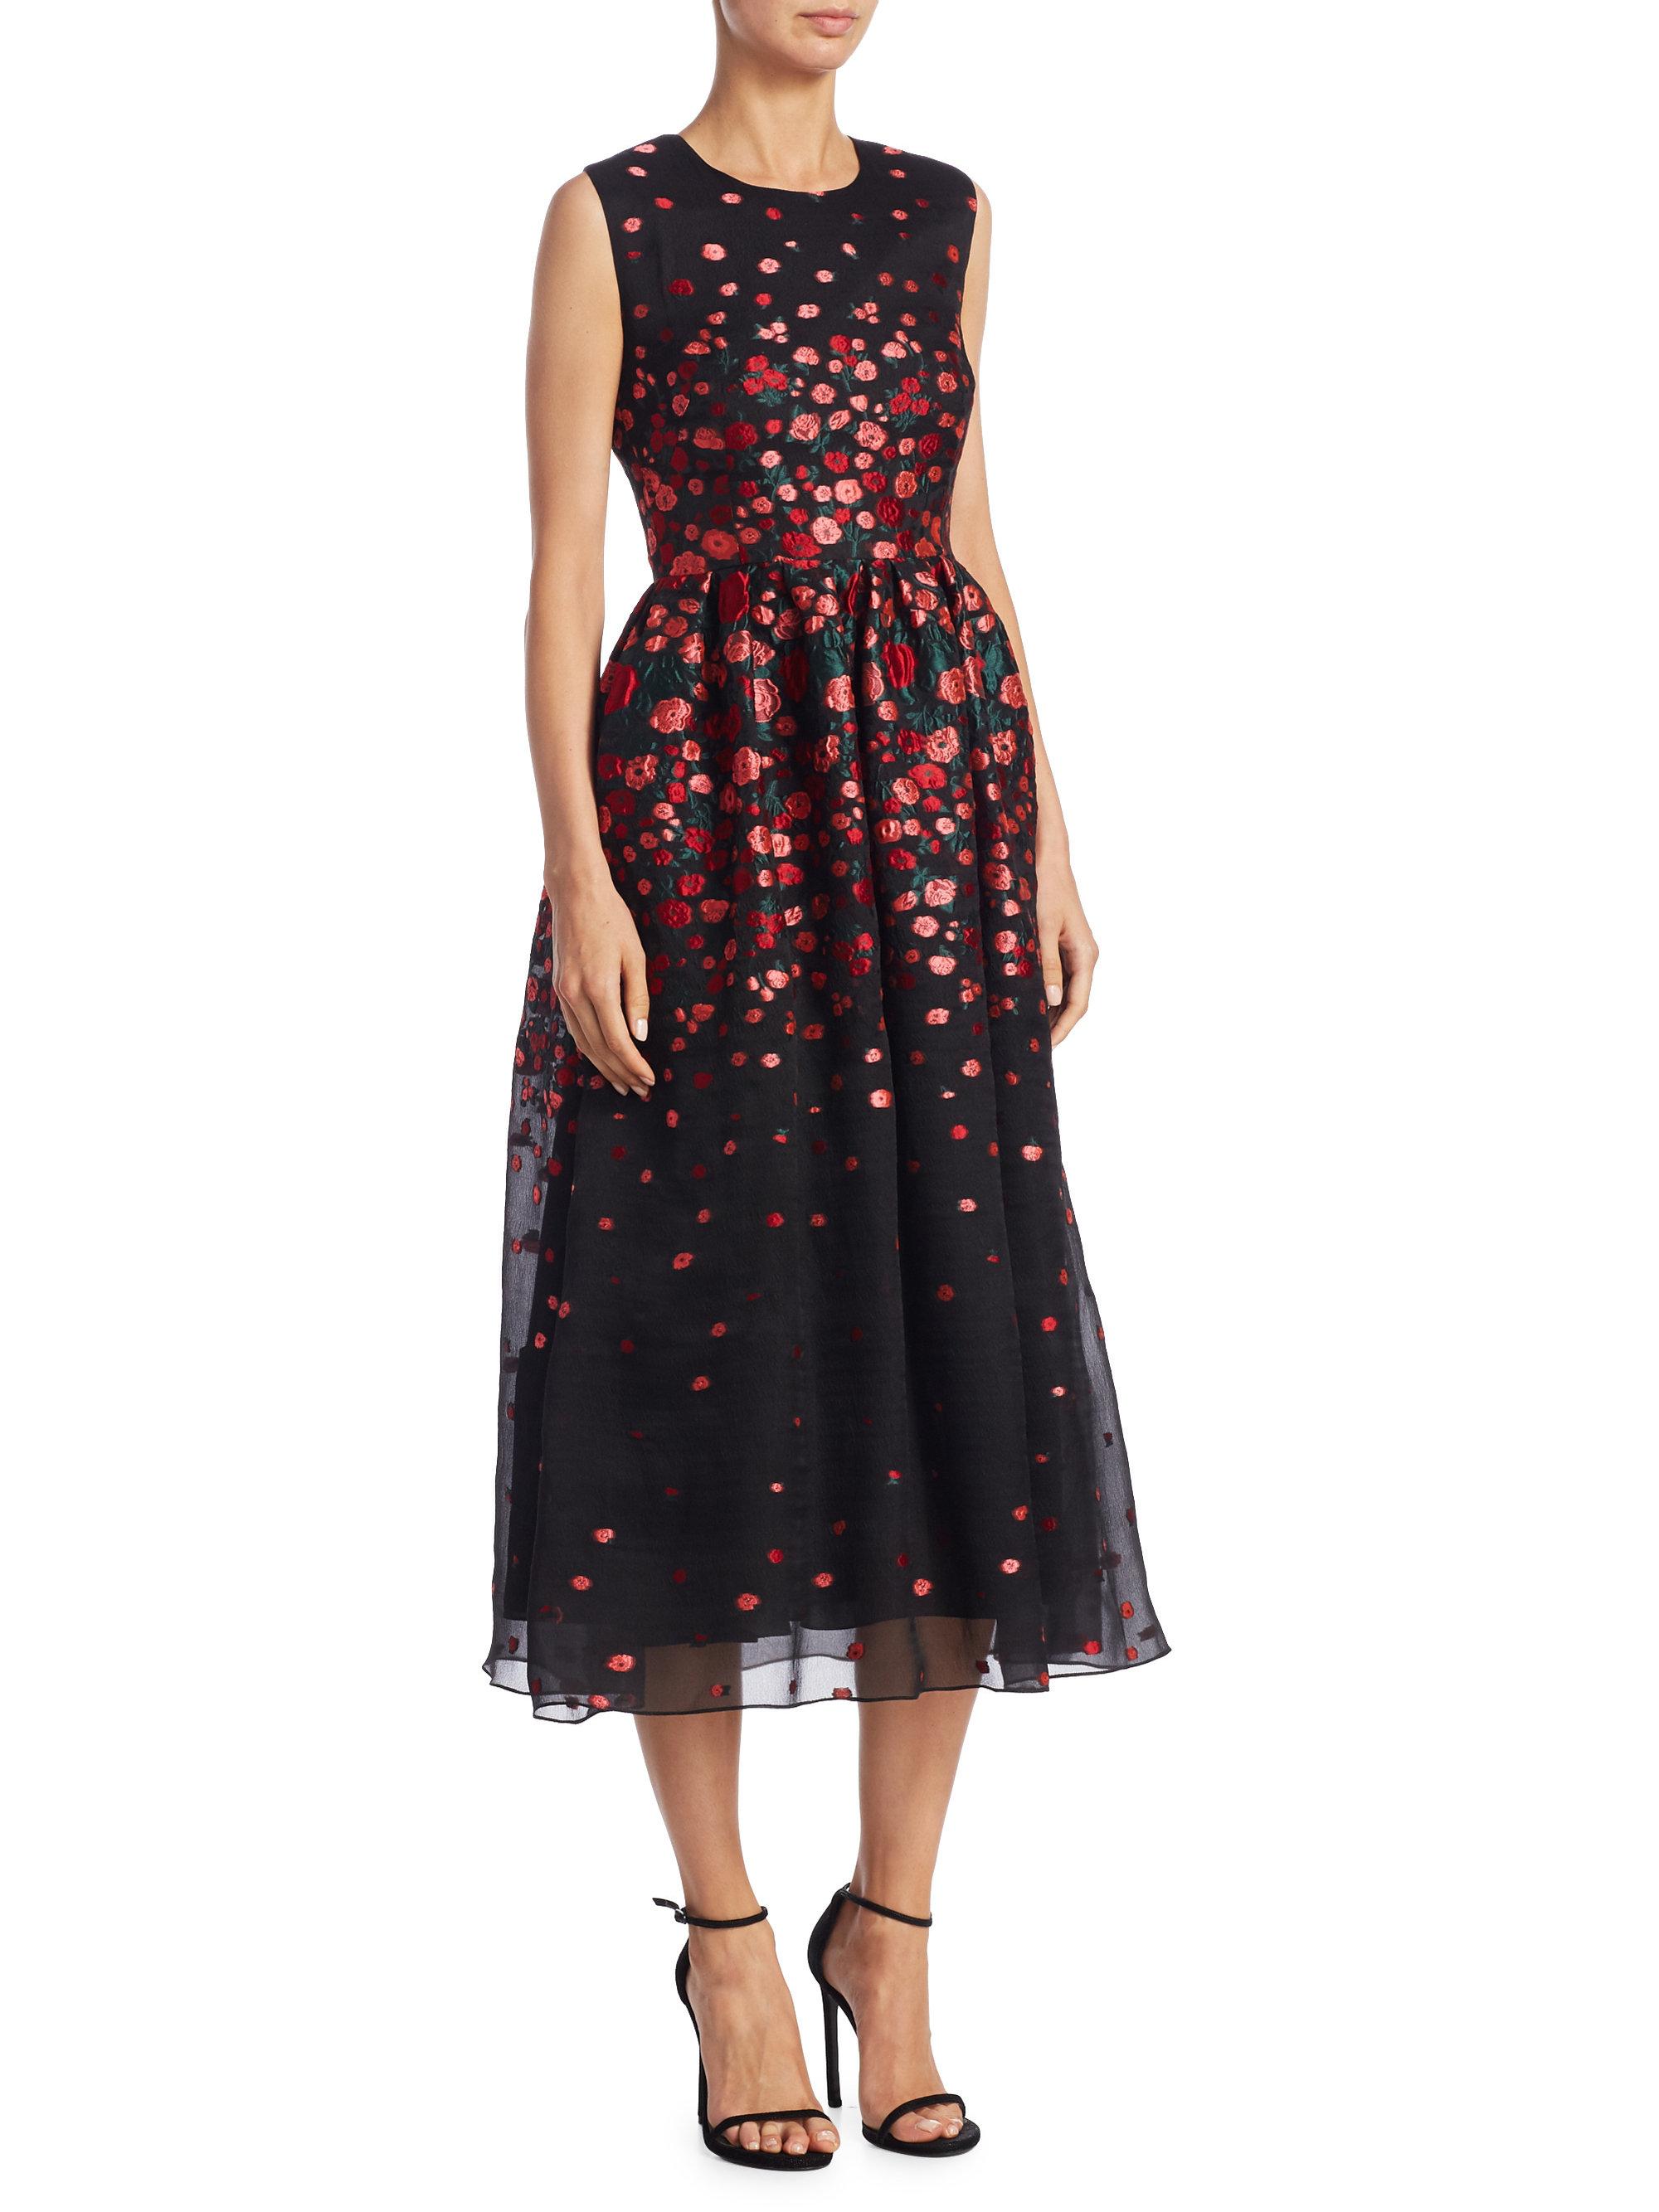 Lyst - Lela Rose Floral Embroidered Silk Dress in Black - Save 71%